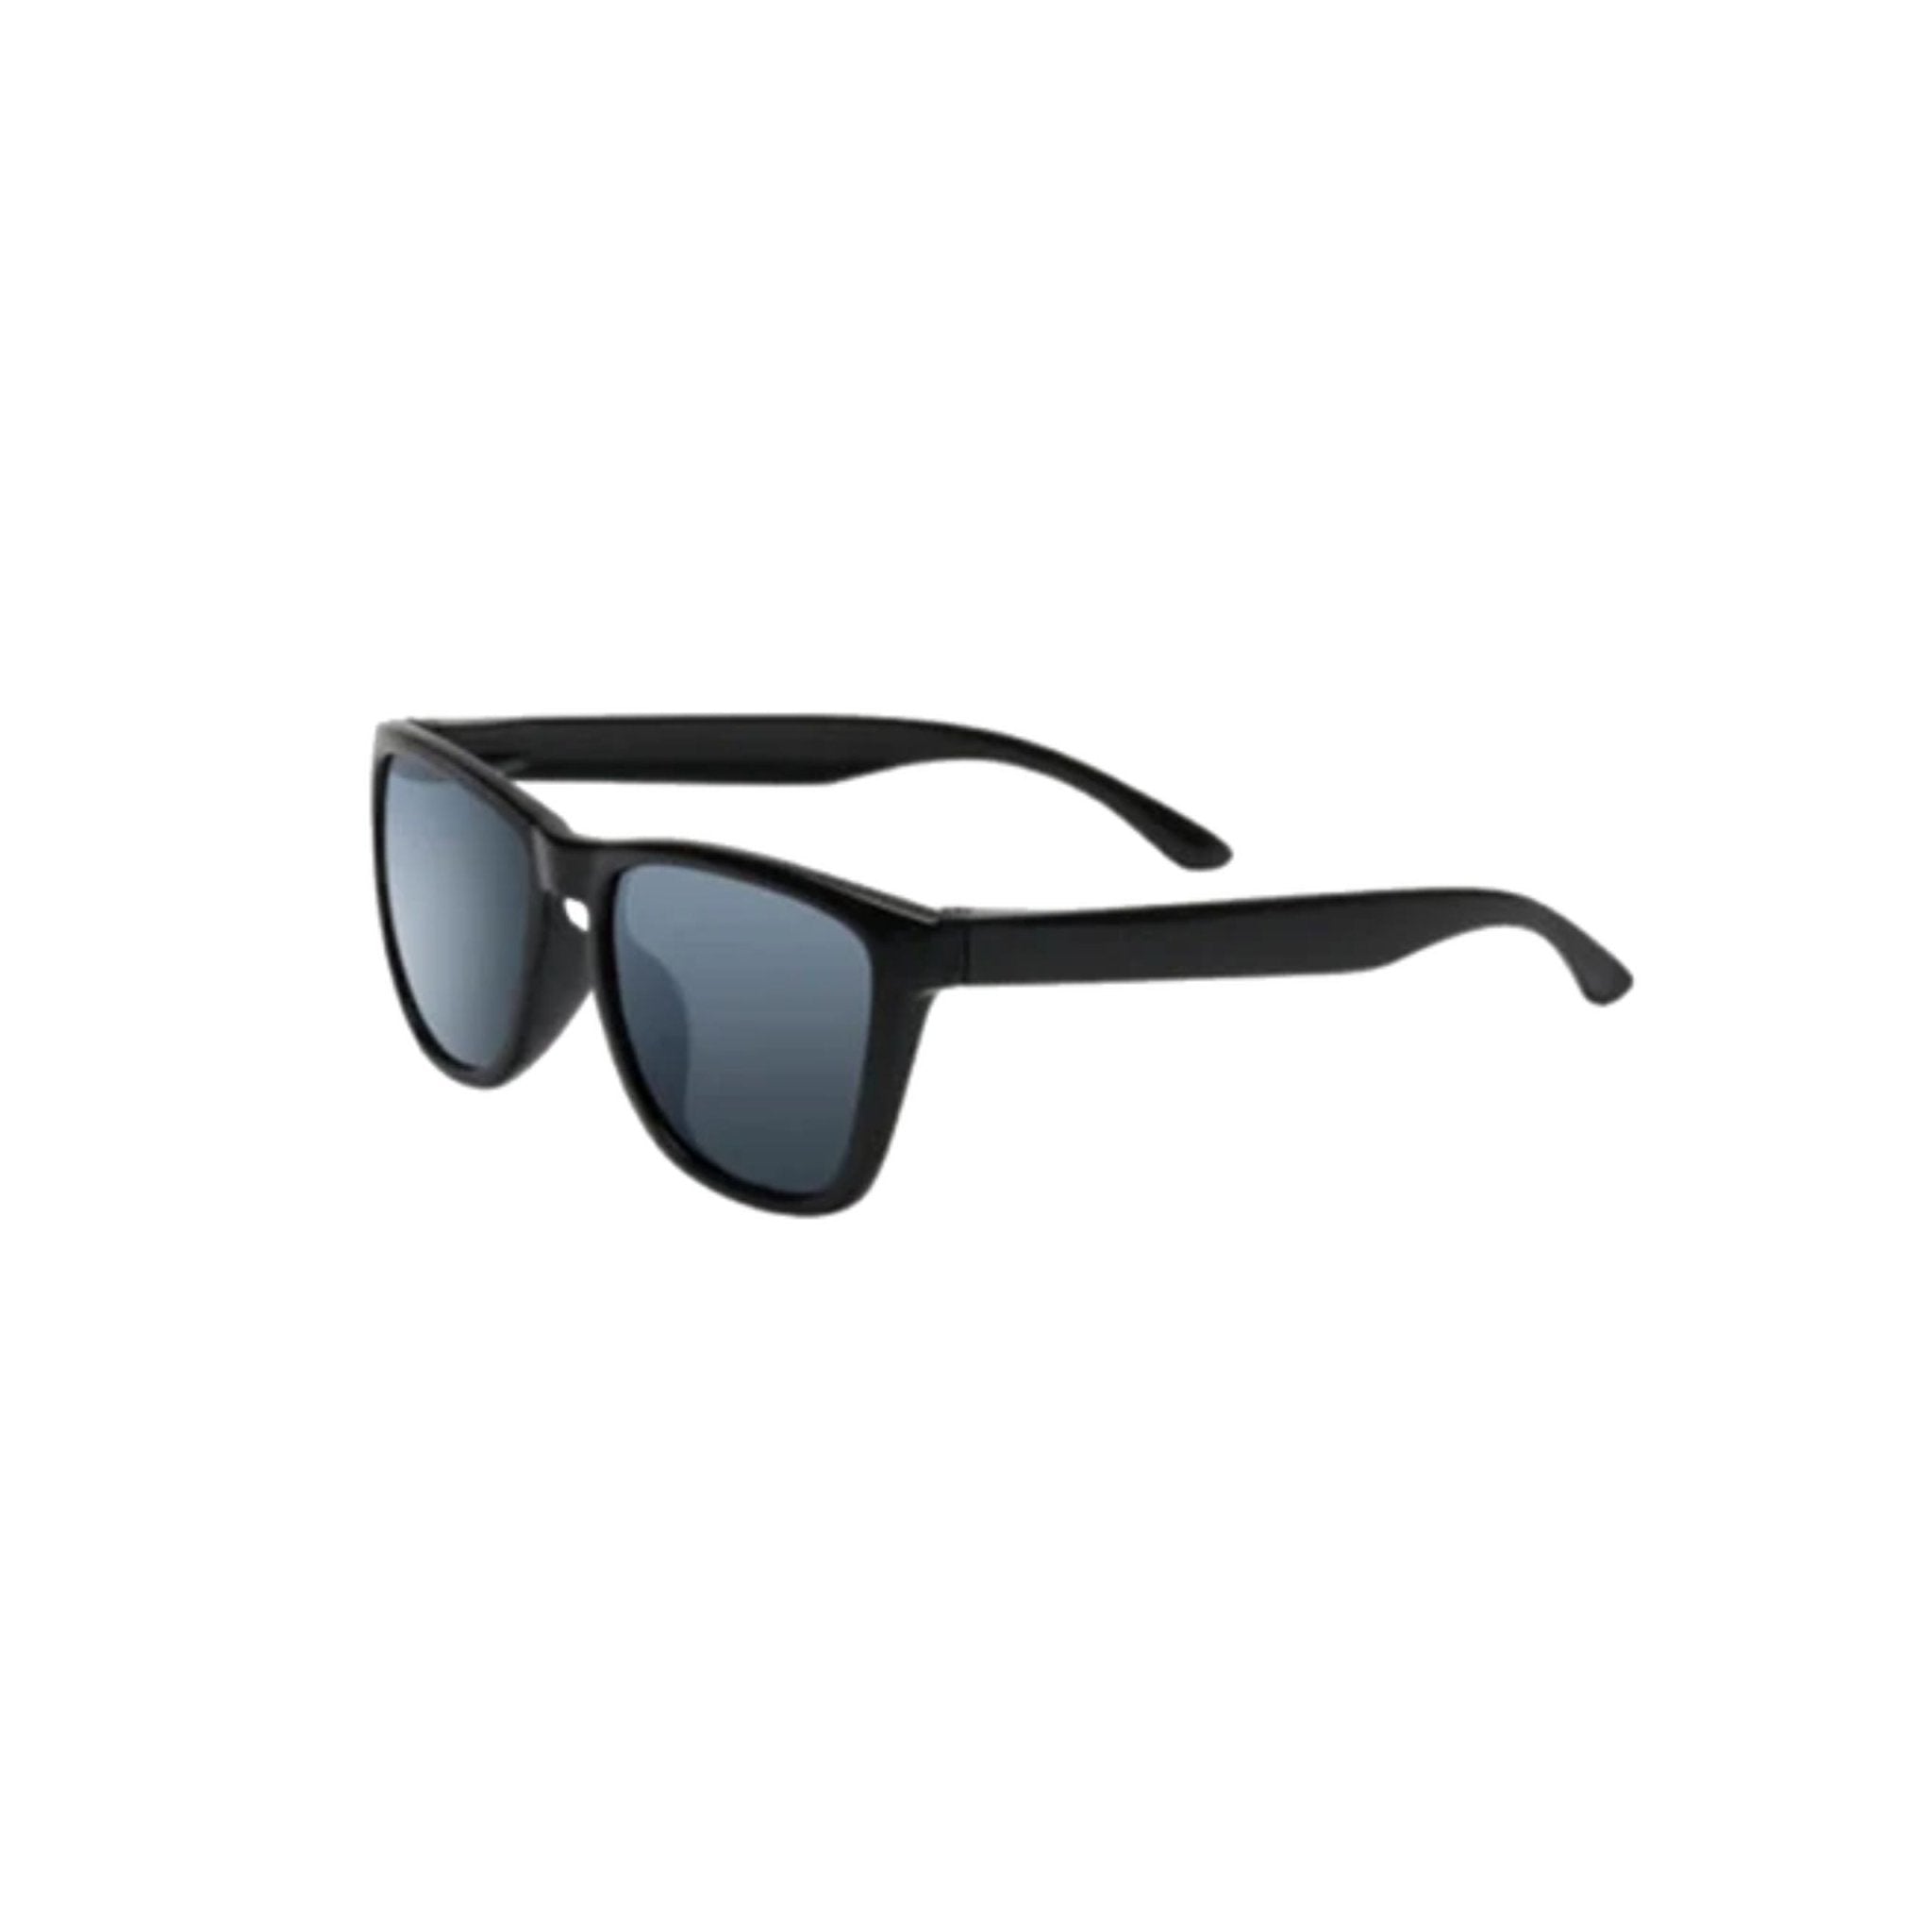 Mi Polarized Explorer Sunglasses - Gray